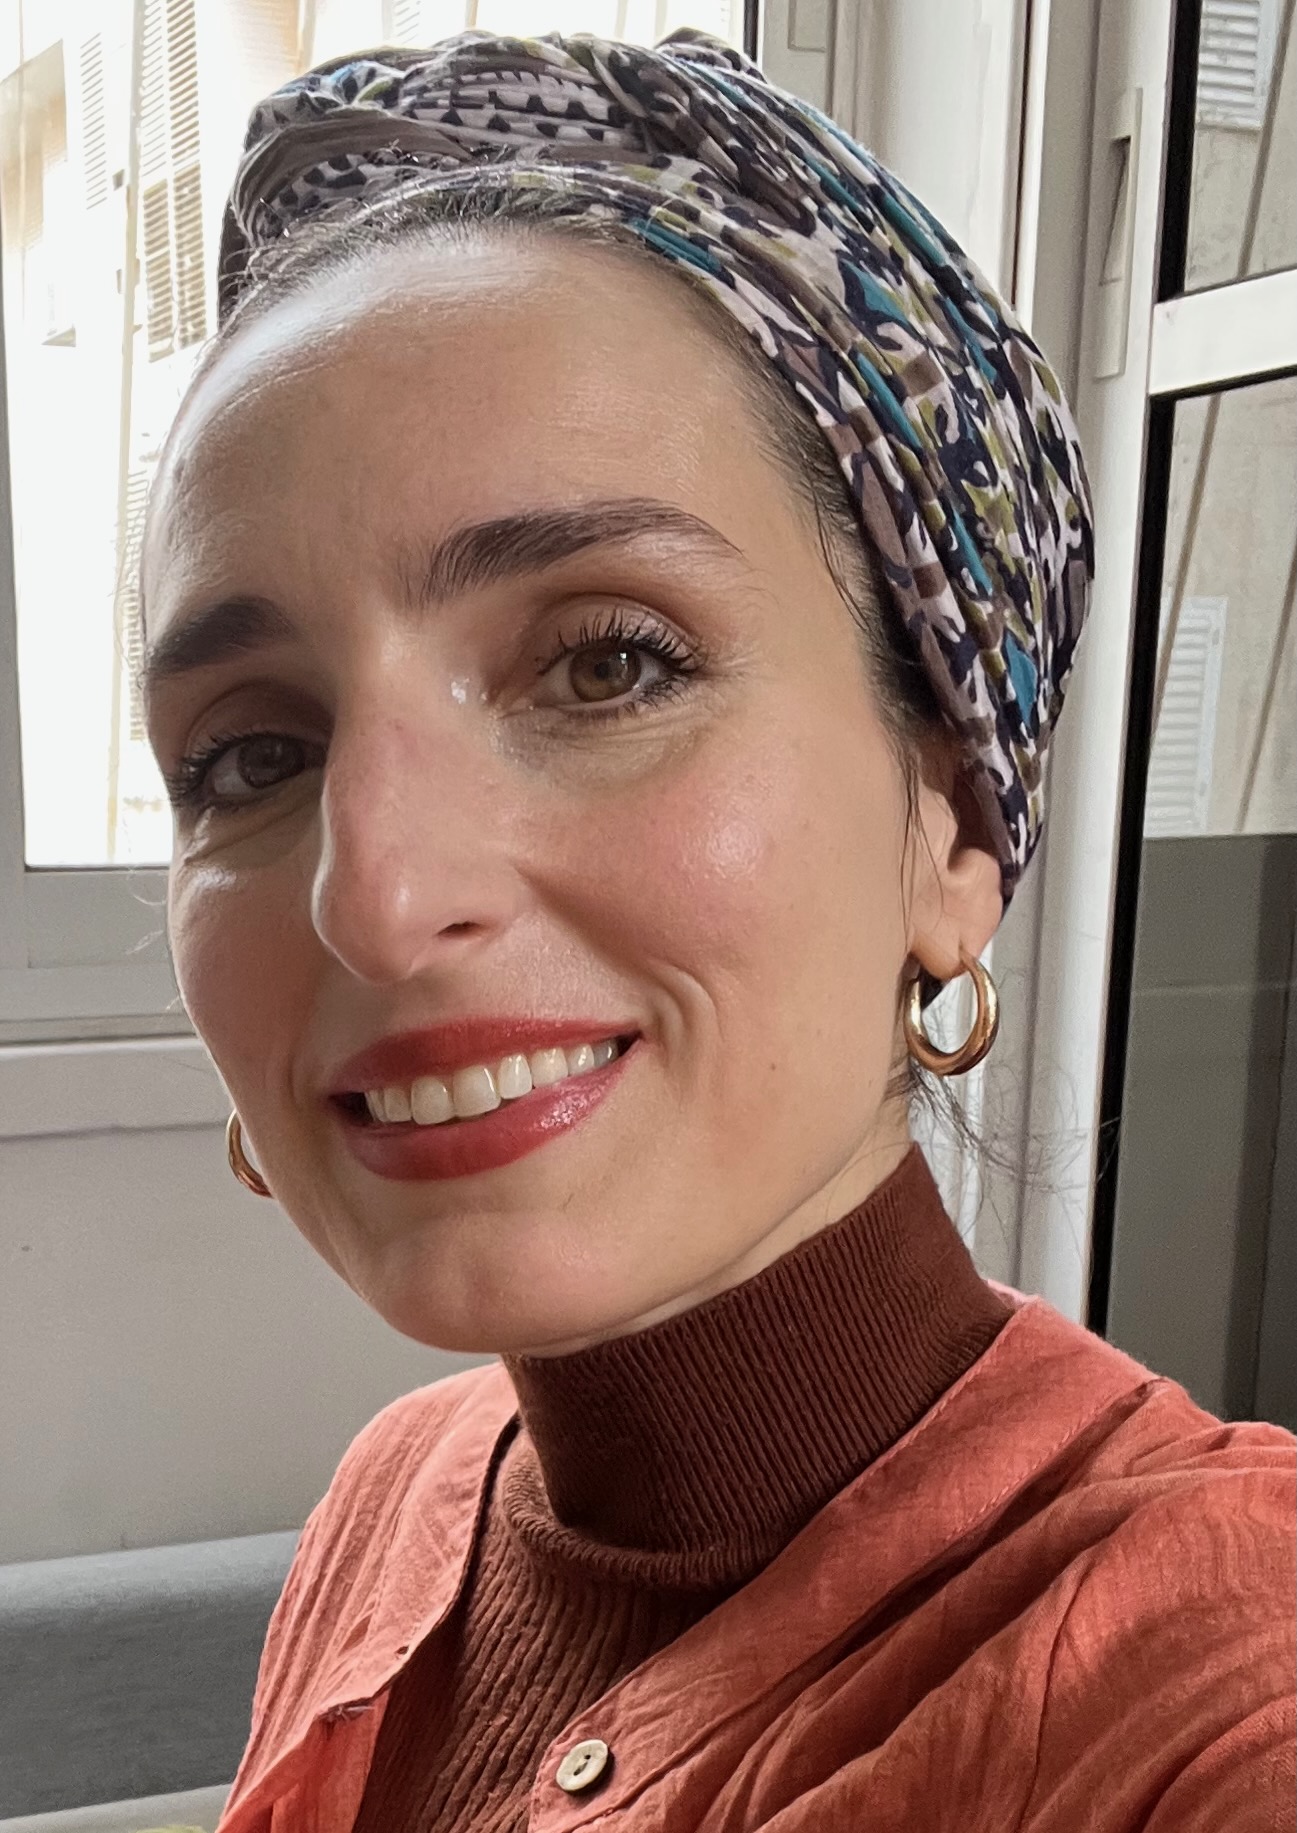 headshot of Allegra Marino Shmulevsky, wearing headwrap, smiling